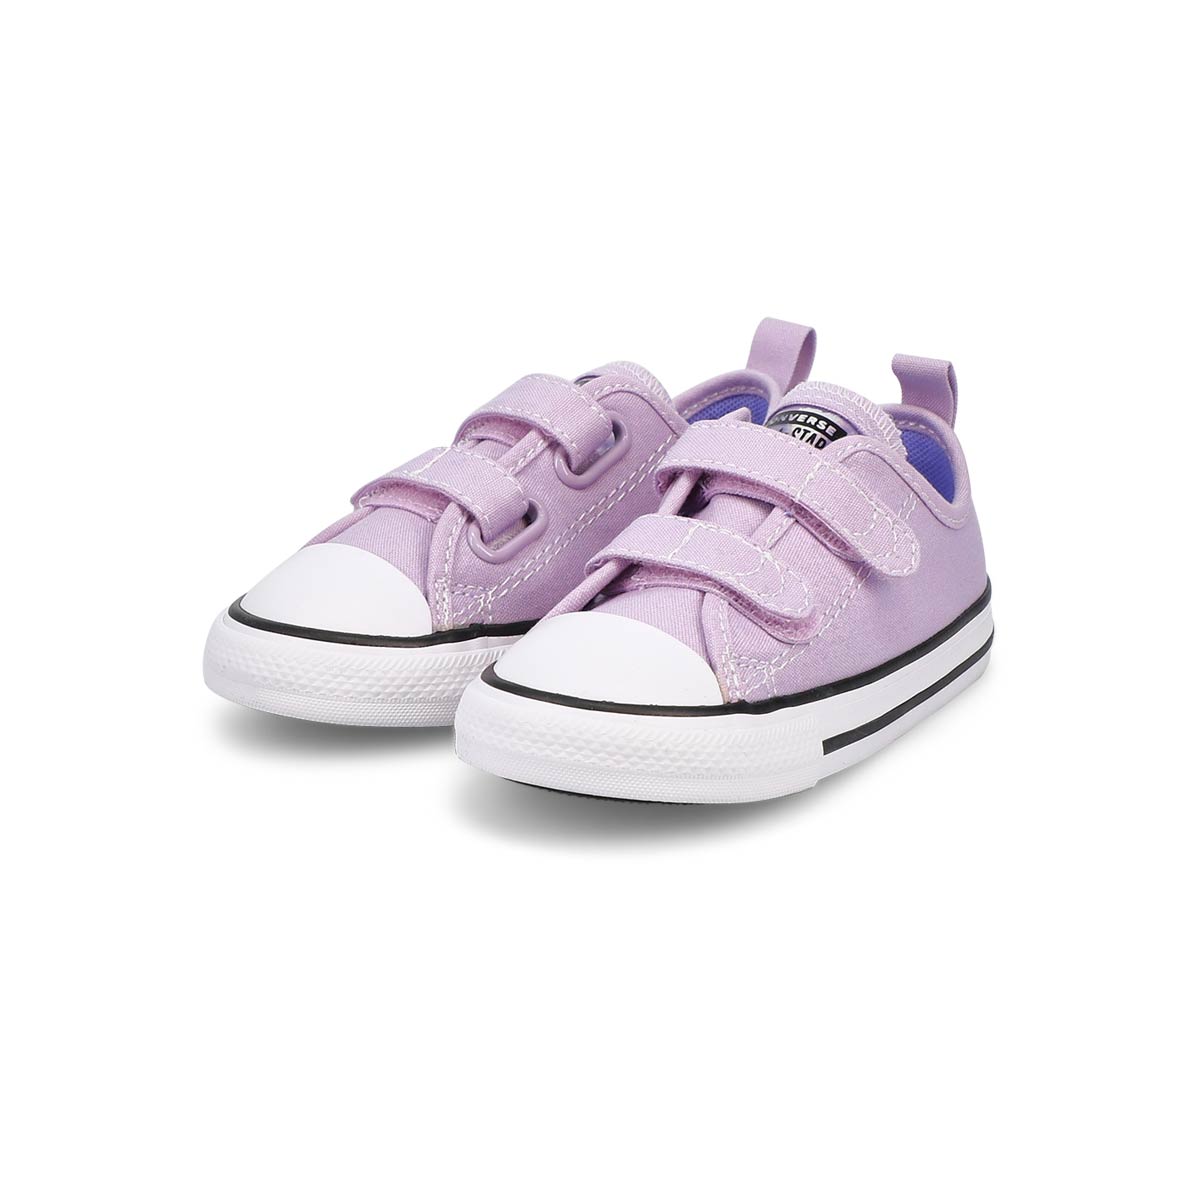 Infants' Chuck Taylor All Star Seasonal 2V Sneaker